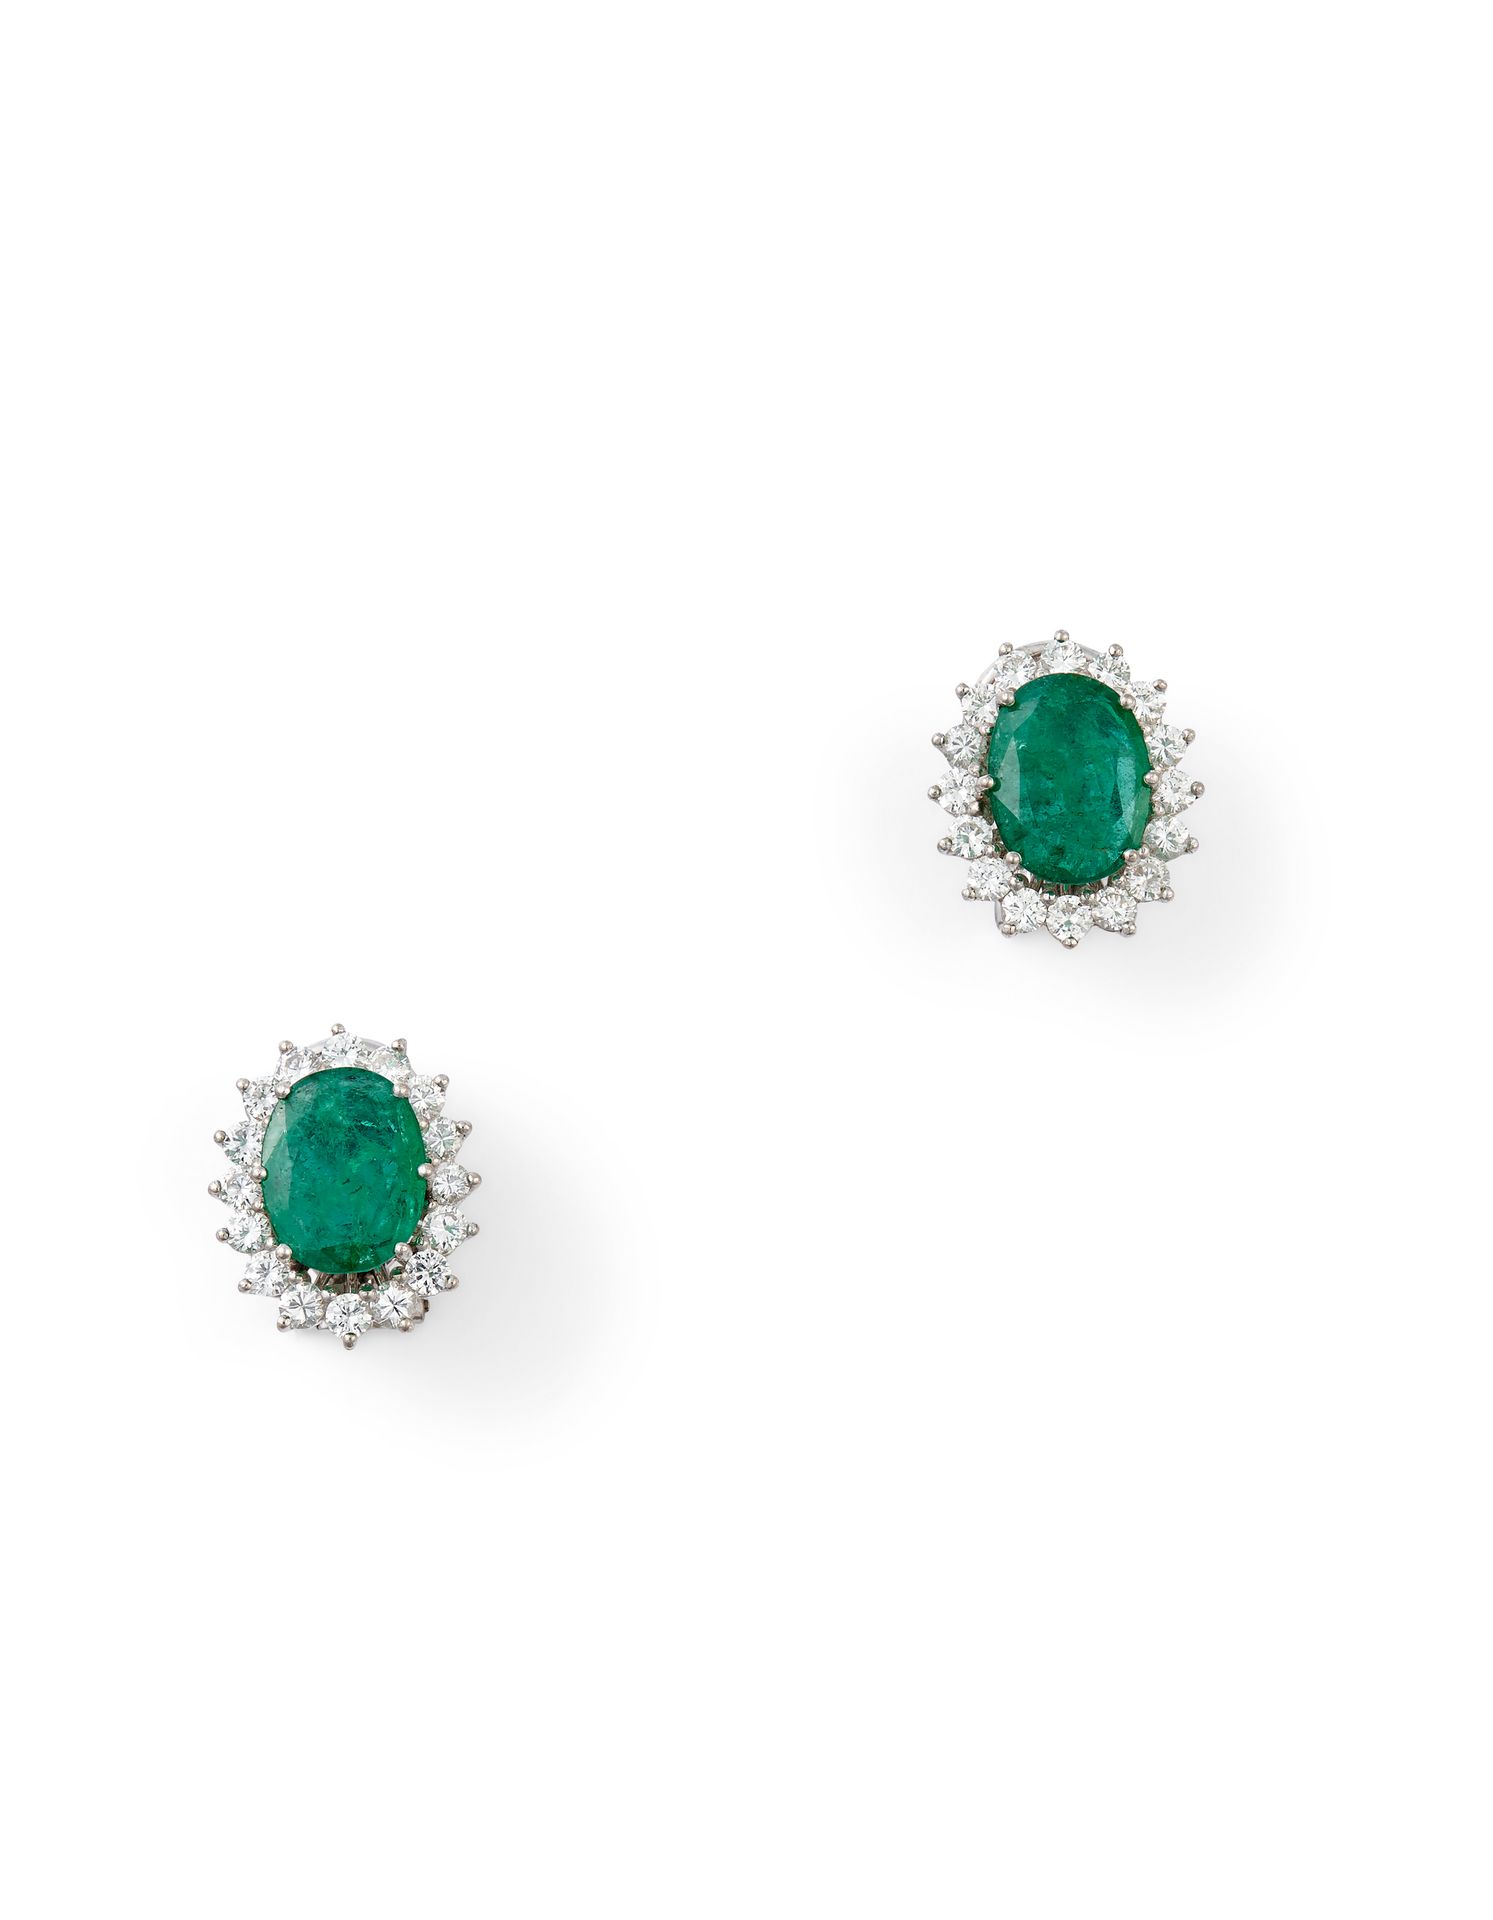 Null 祖母绿和钻石耳环 18K白金，每只耳环都镶有一颗椭圆形祖母绿（+/- 1.4克拉），周围有明亮式切割钻石。

印记：无

尺寸: 1.5 cm - T&hellip;